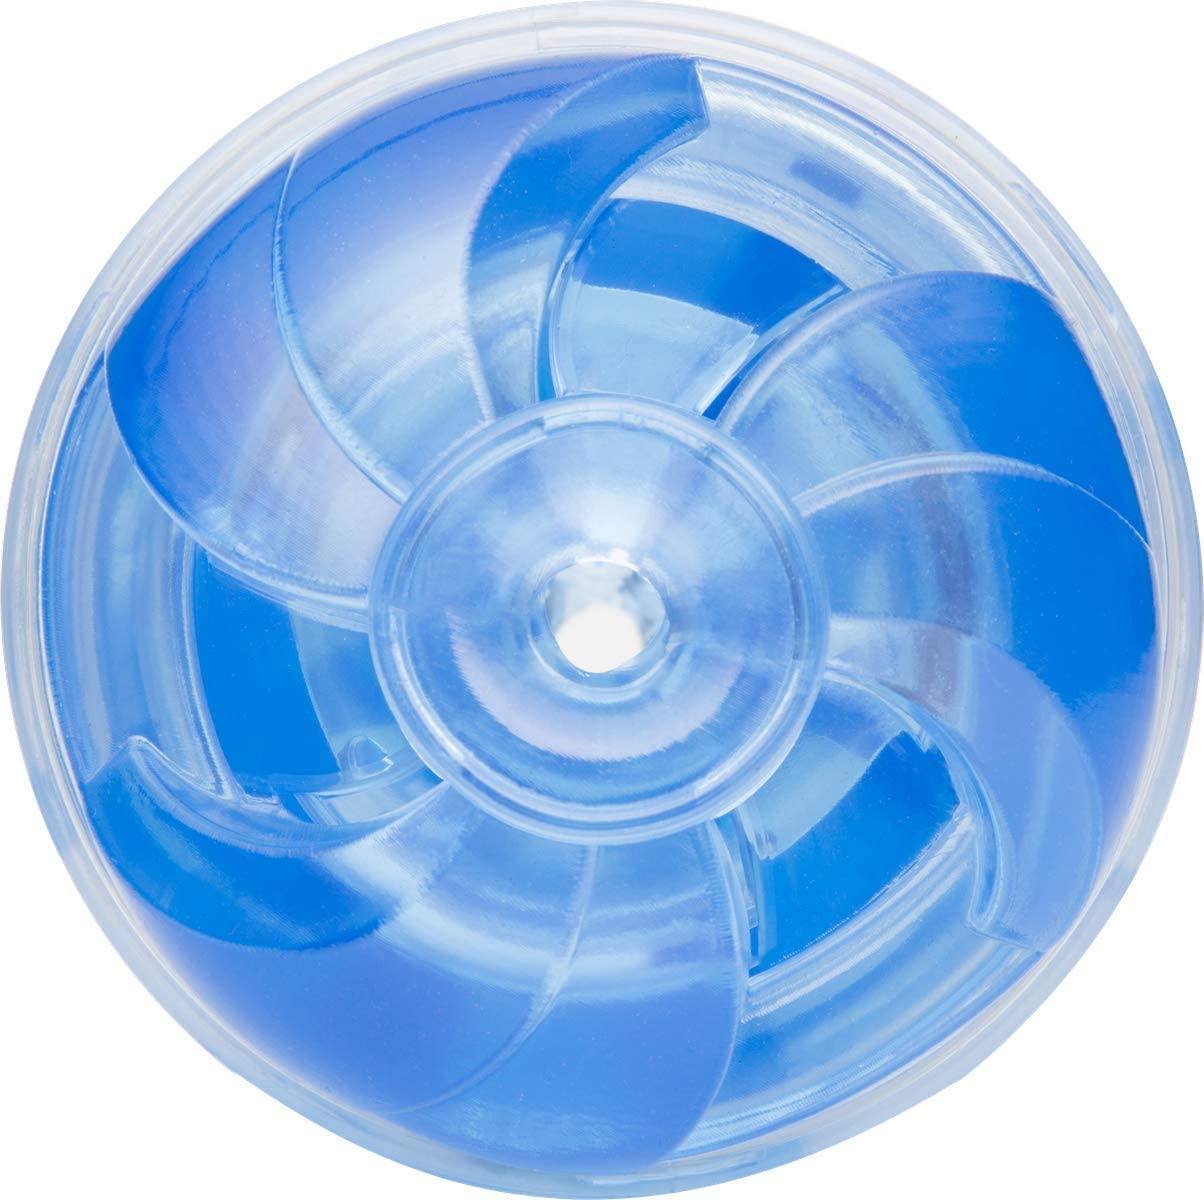 Fleshlight Turbo Thrust Blue Ice - Buy At Luxury Toy X - Free 3-Day Shipping